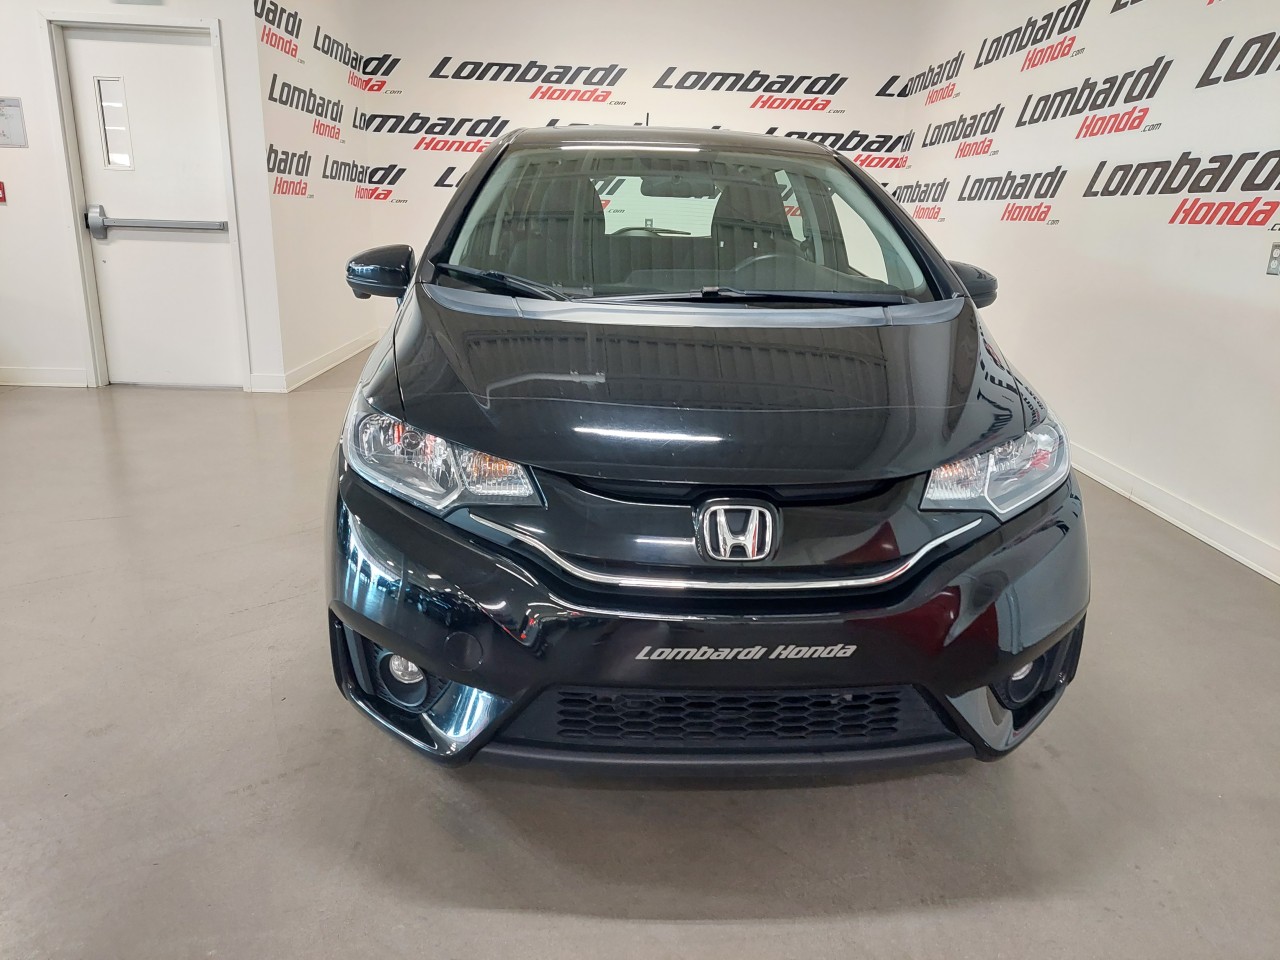 2017 Honda Fit EX Image principale